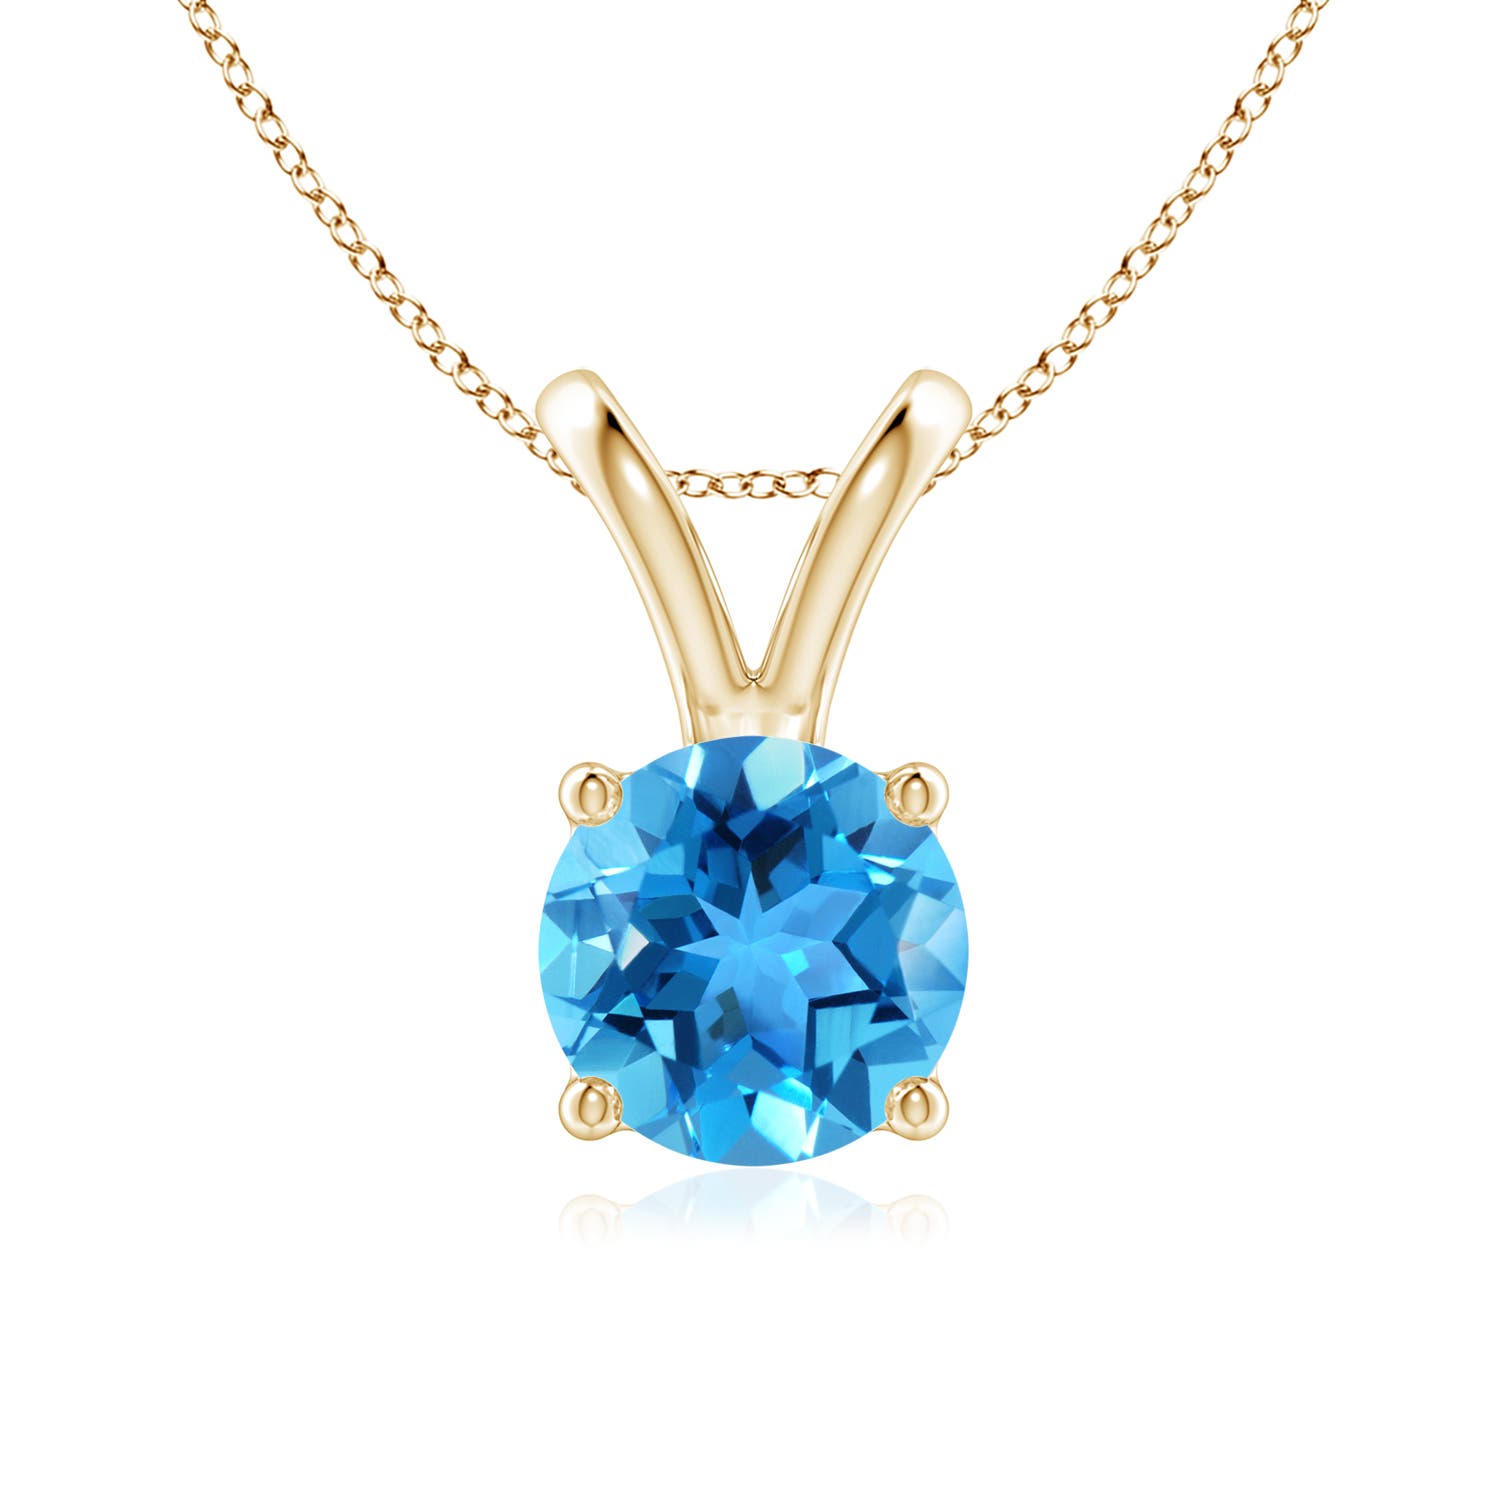 Shop Swiss Blue Topaz Pendant Necklaces for Women | Angara